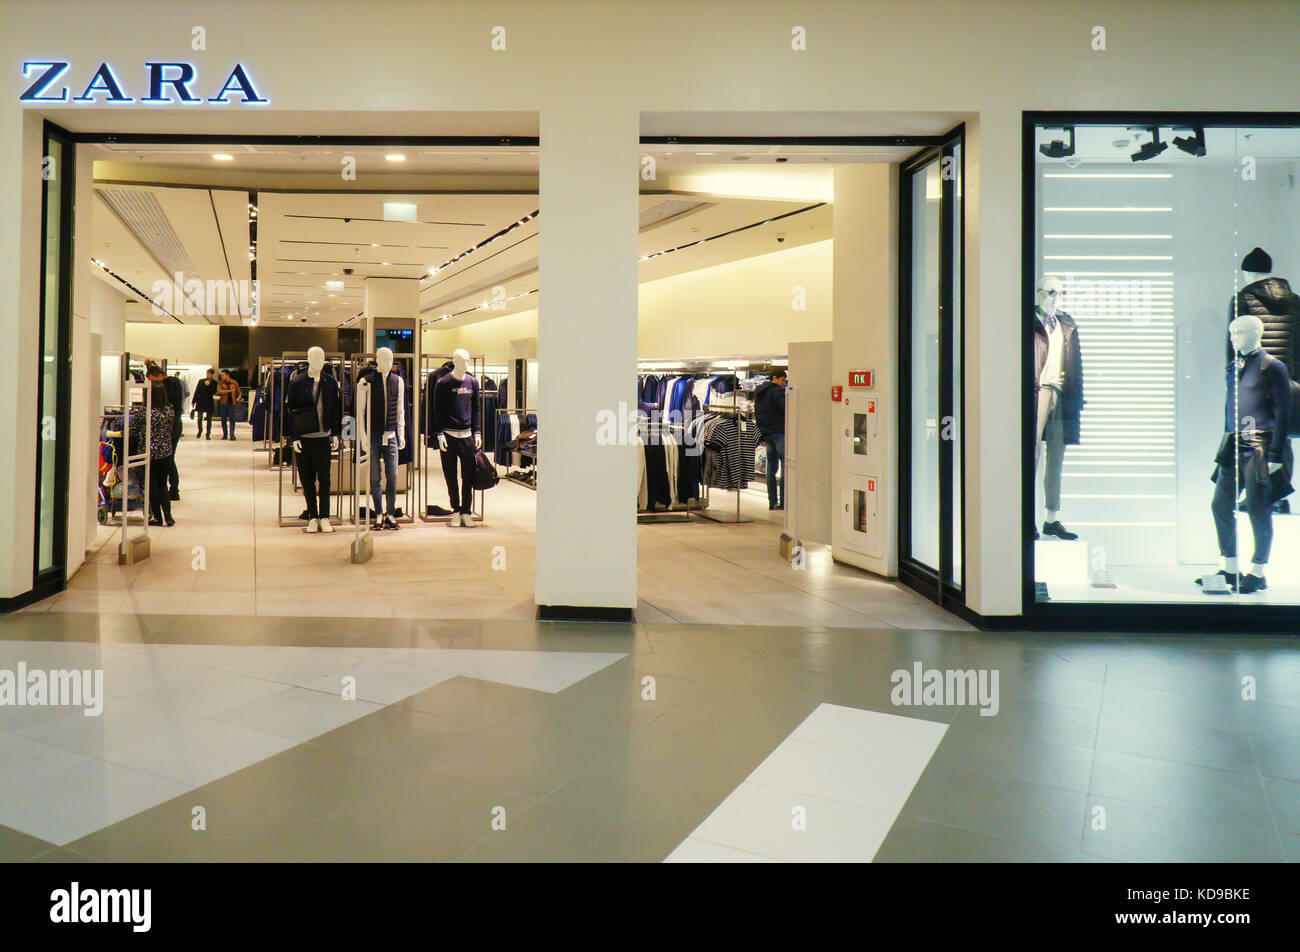 Zara shop in shopping center Aquarell Stock Photo - Alamy